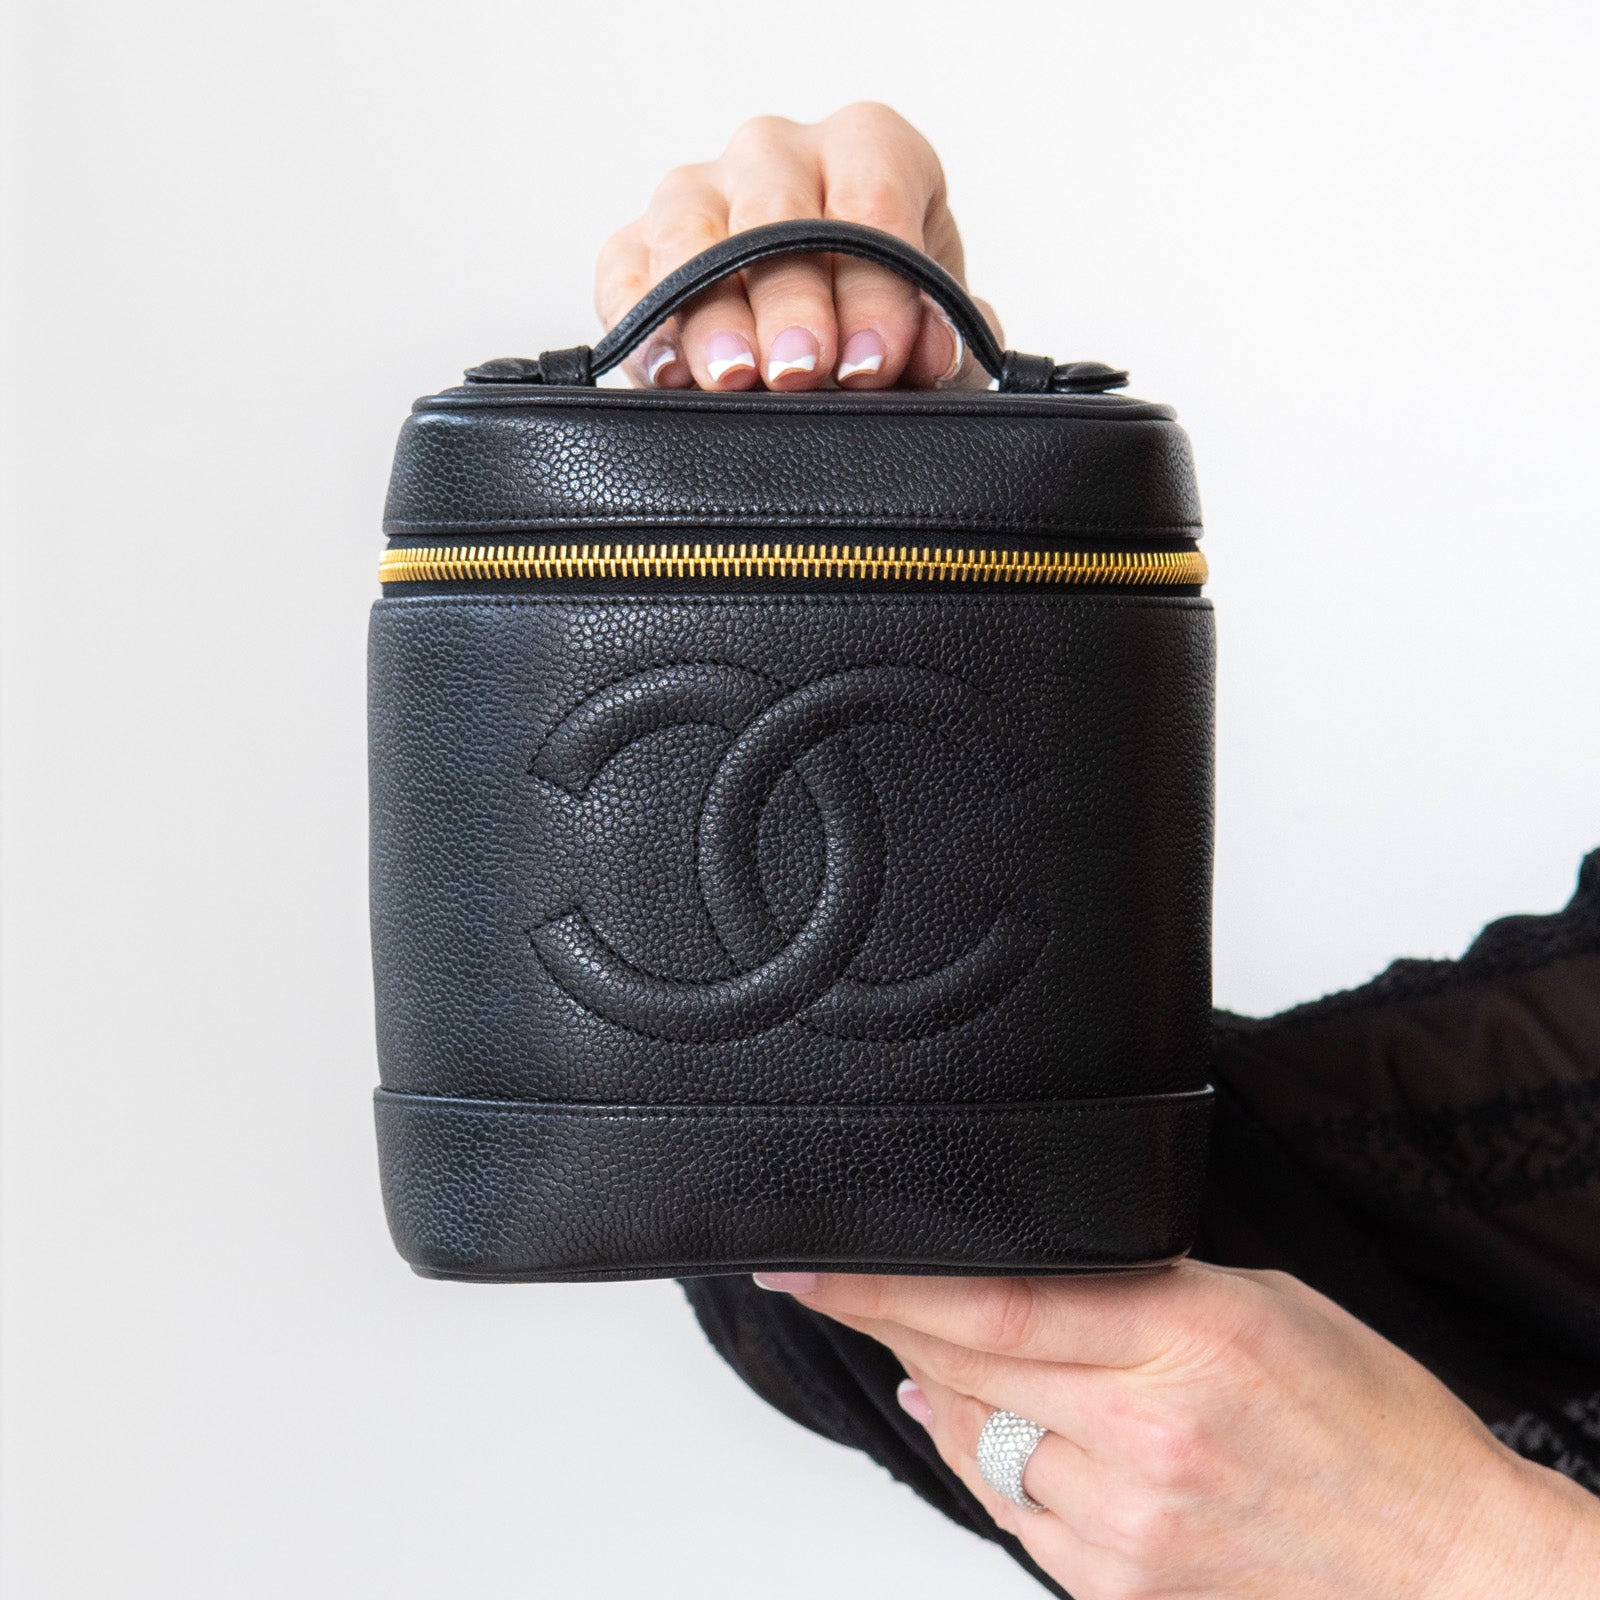 Chanel Black Caviar Timeless CC Vanity Bag - Image 2 of 10